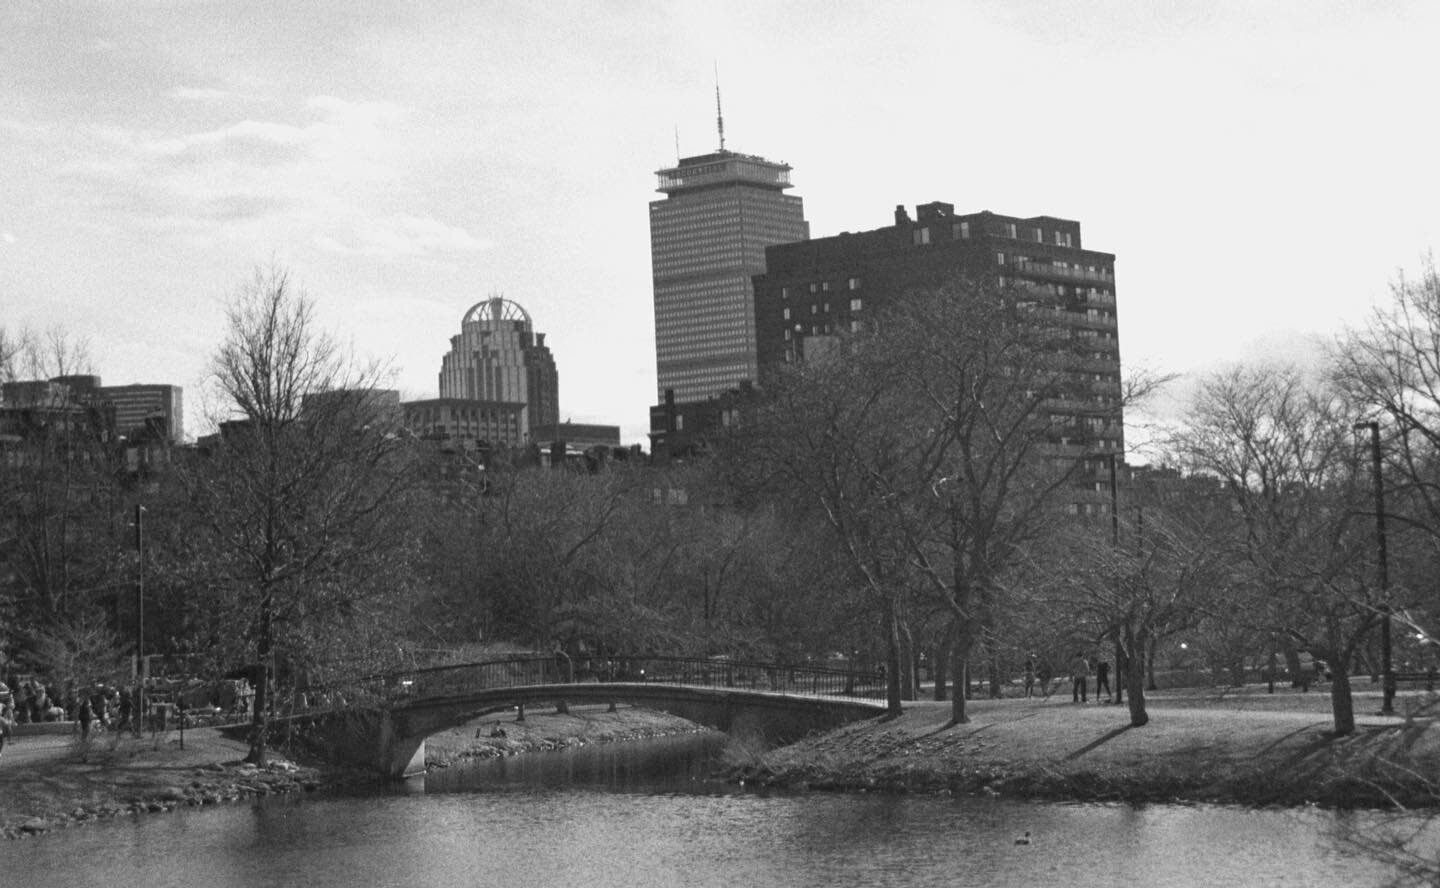 Bridges of Boston, Kodak Tri-X 400